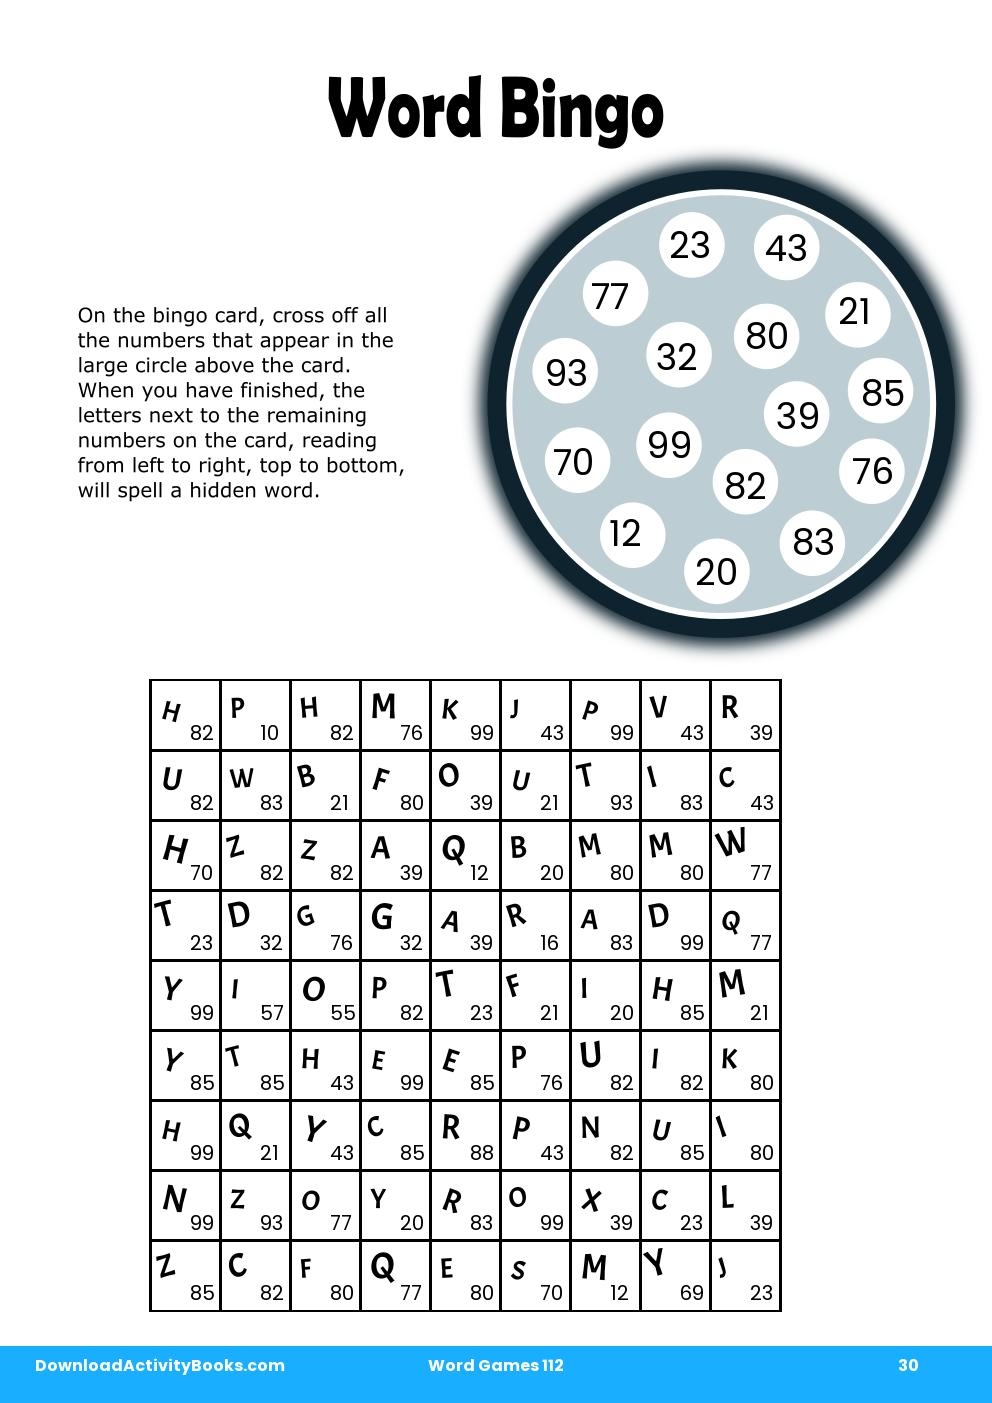 Word Bingo in Word Games 112